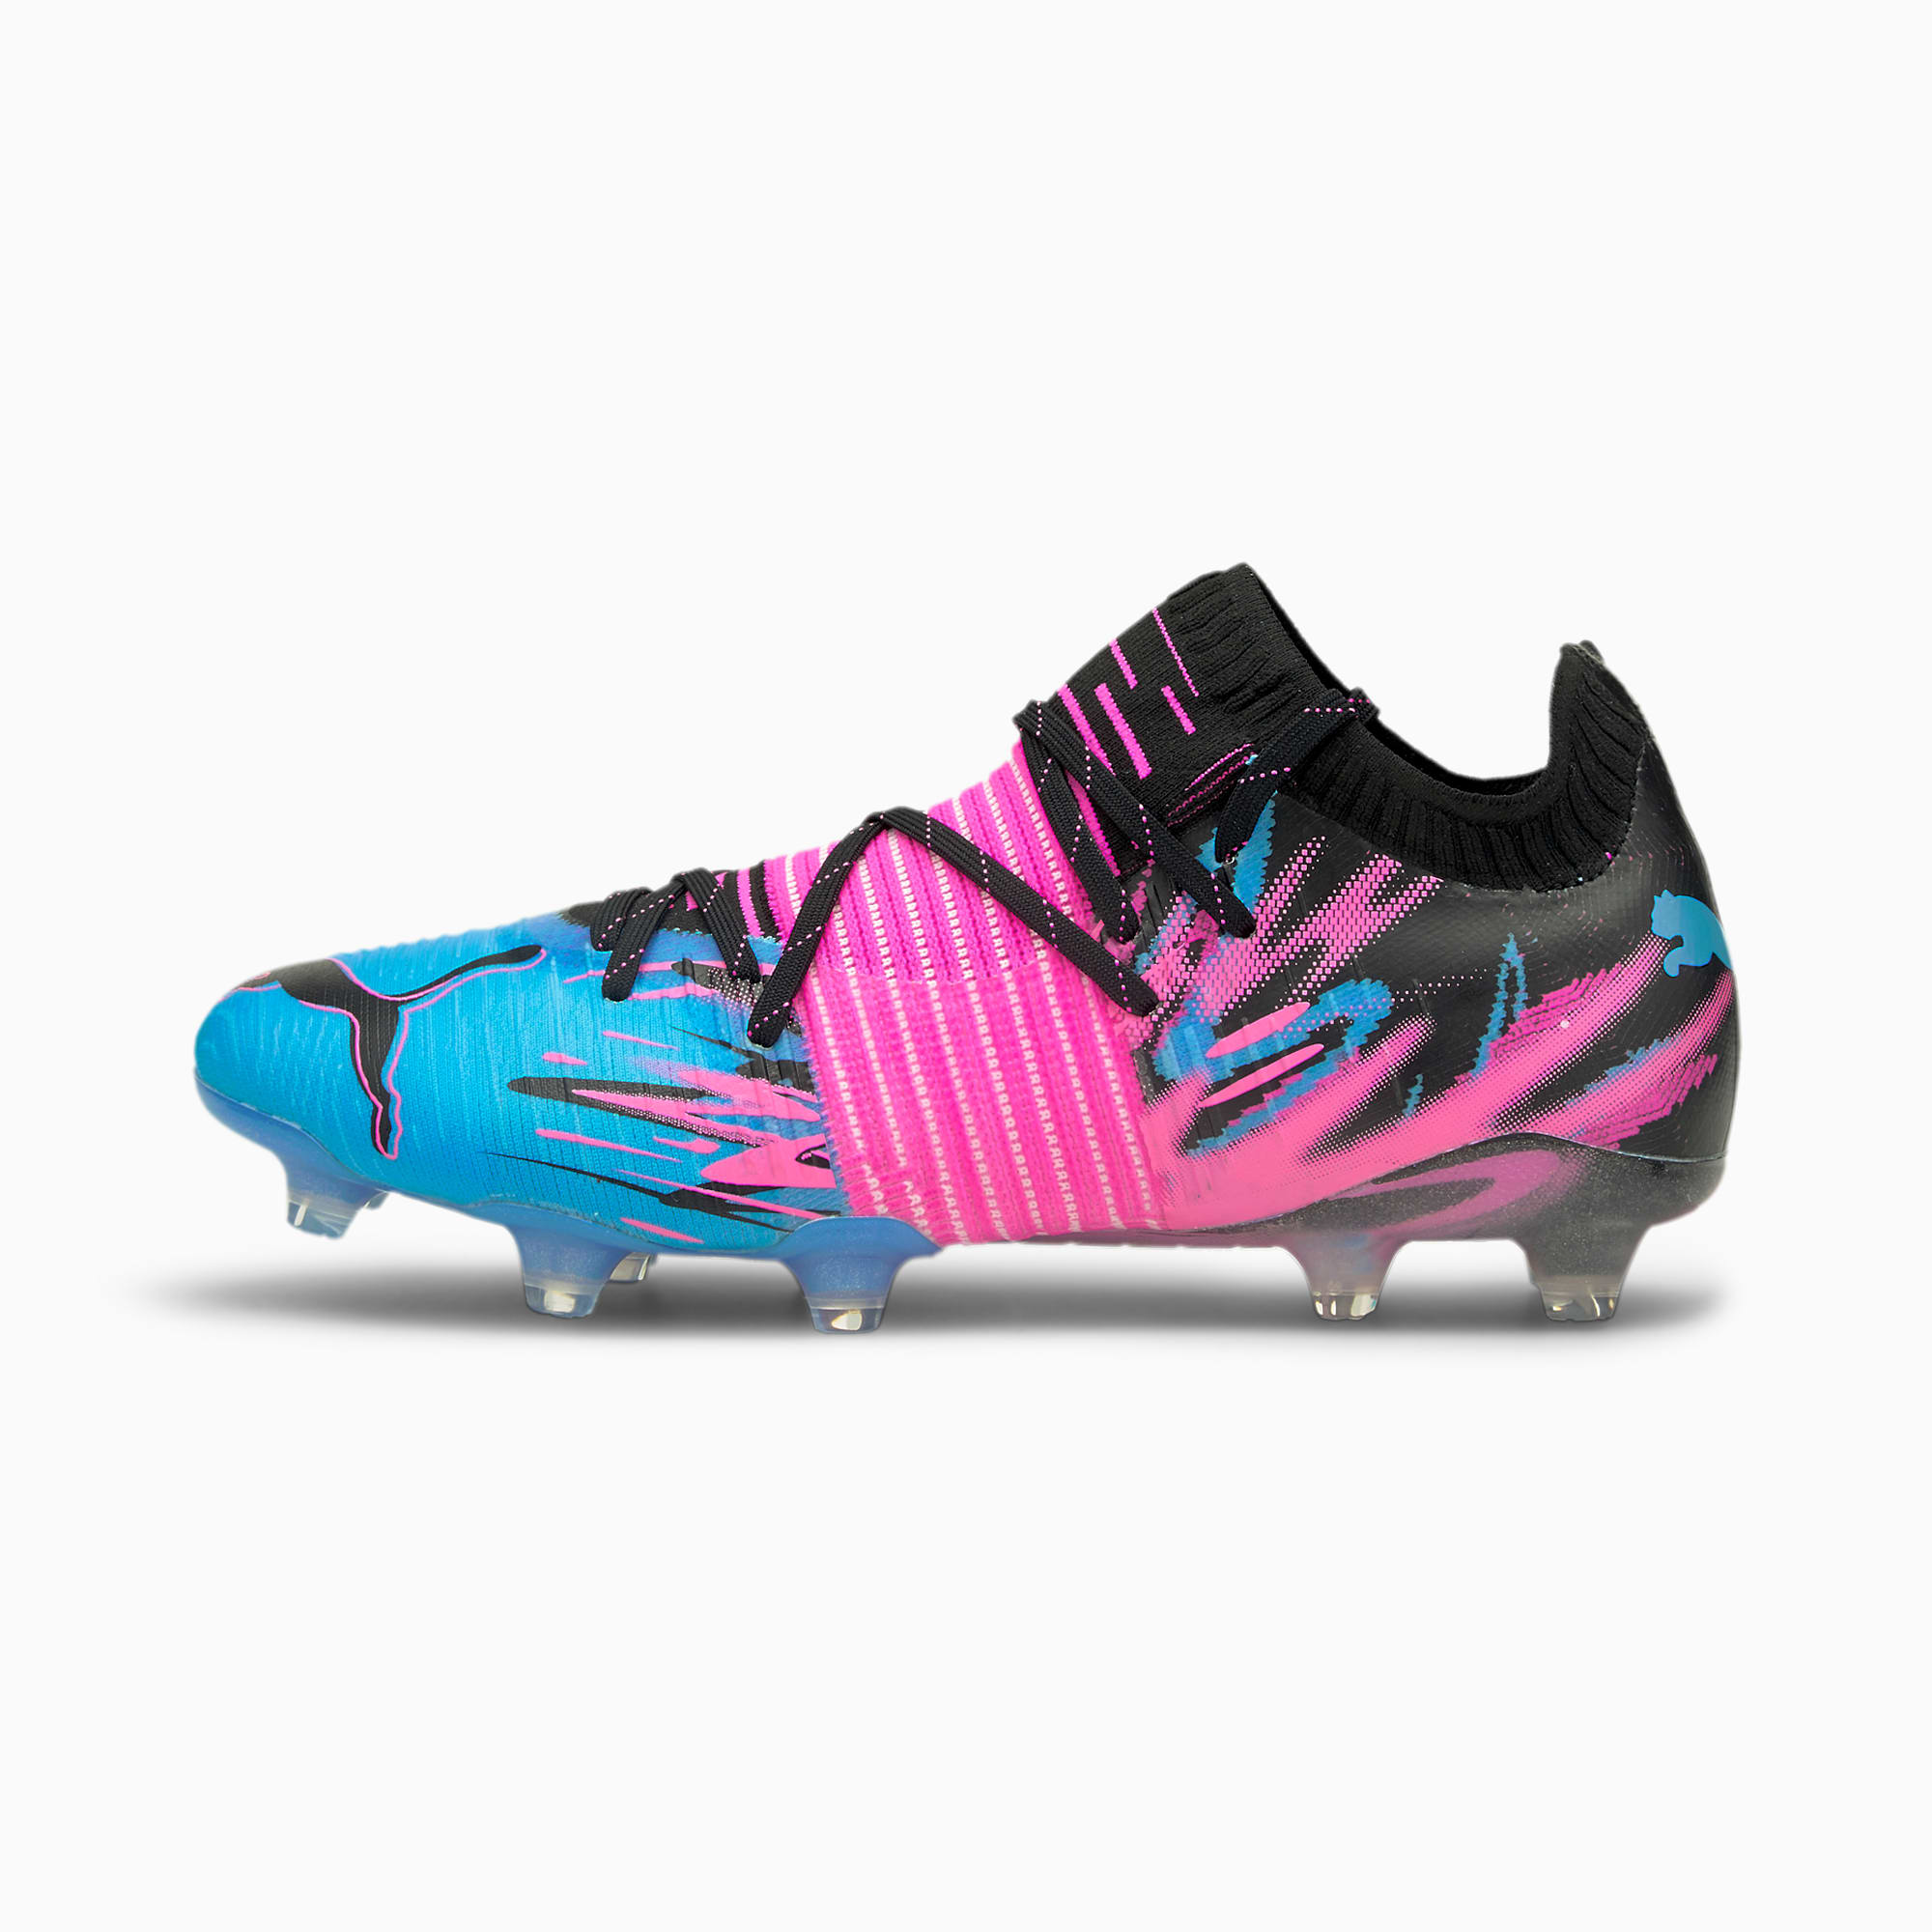 neymar pink boots